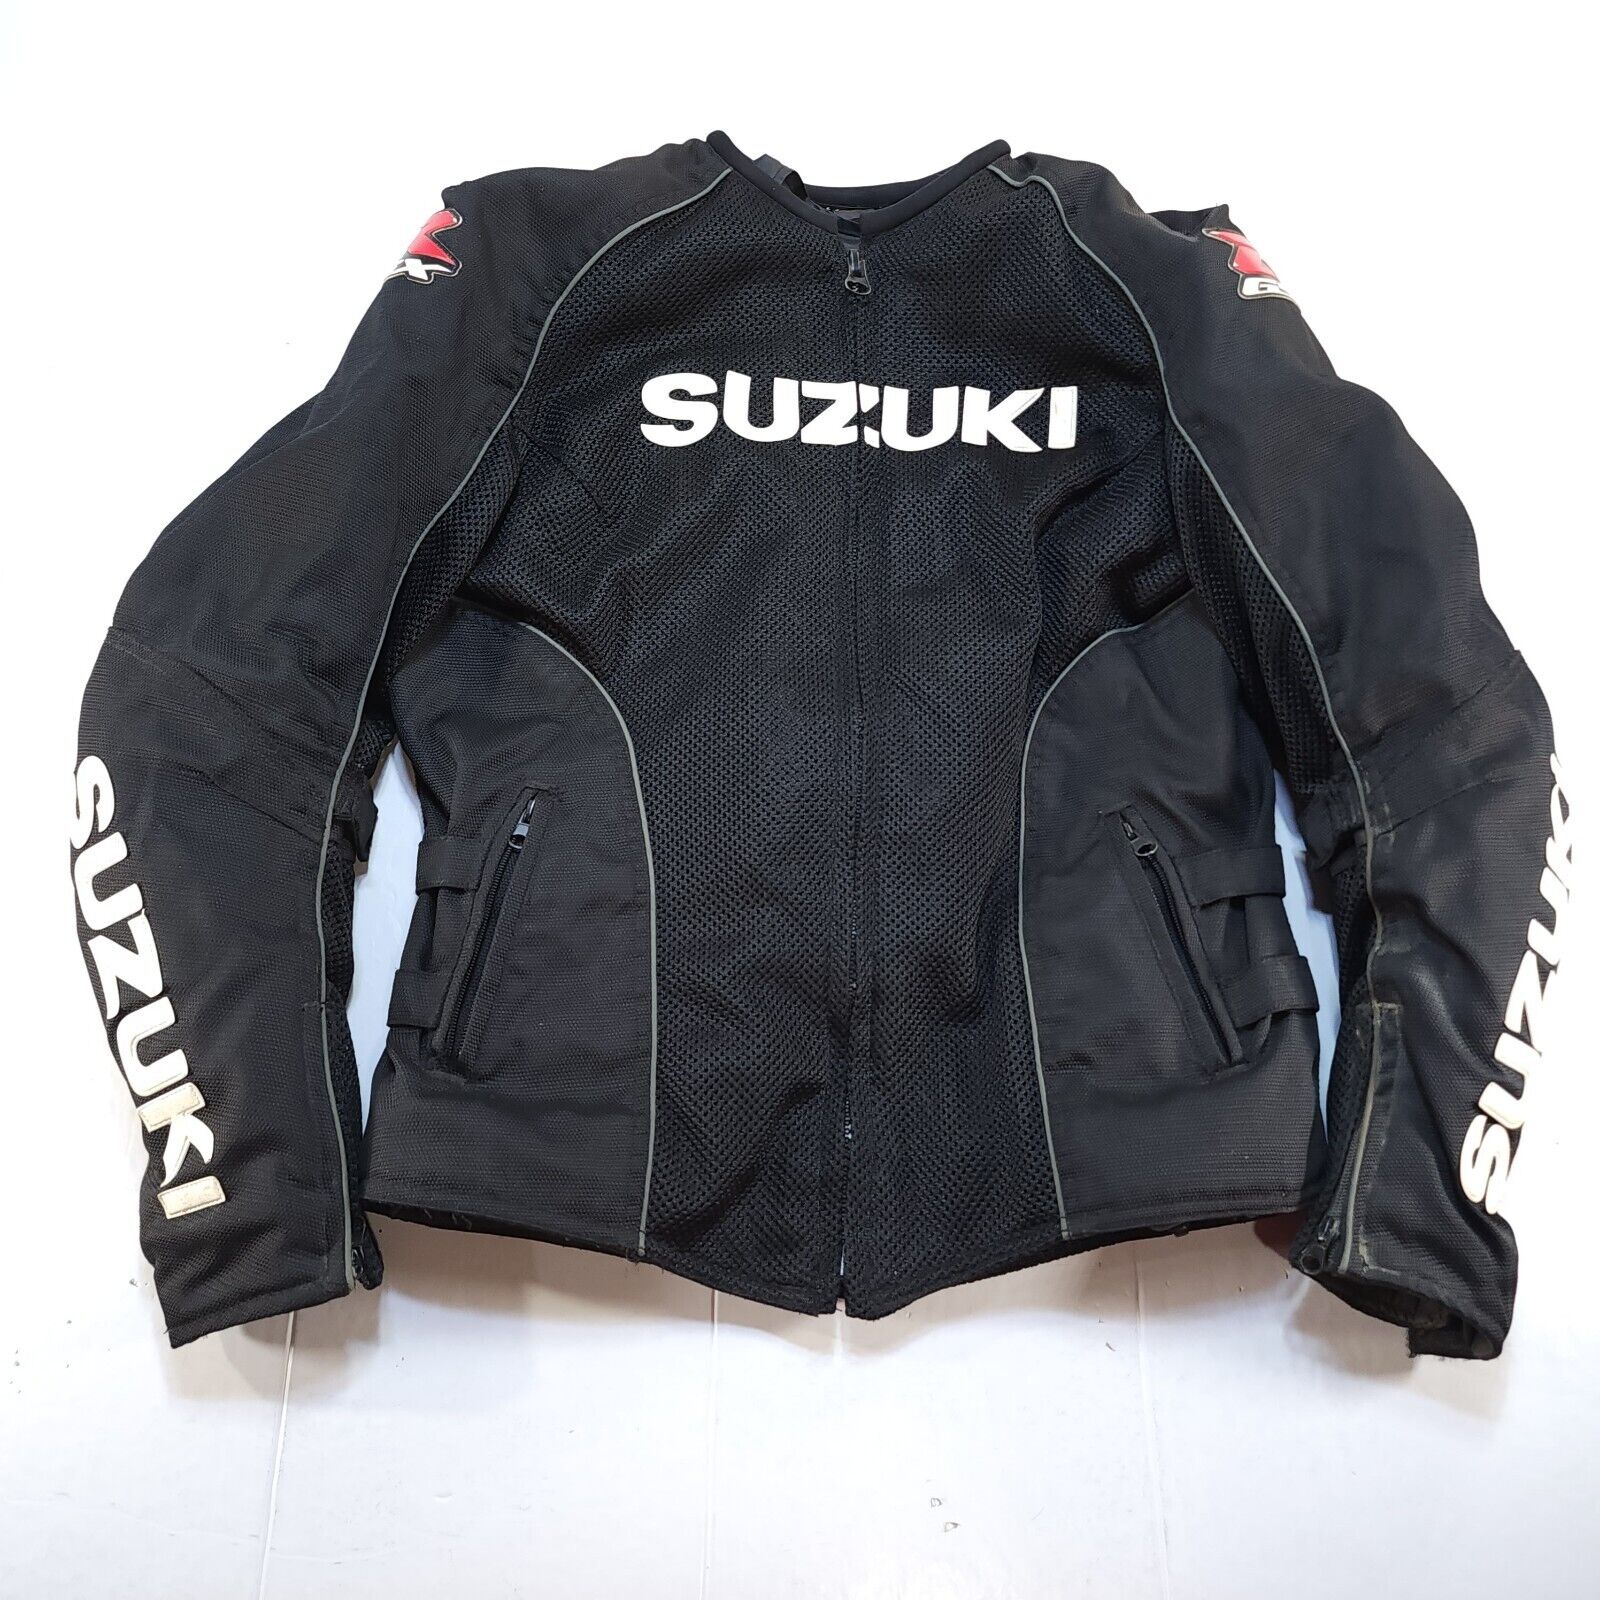 Suzuki R GSX Armor Textile Motorcycle Jacket Womens Medium Liner Black Full Zip